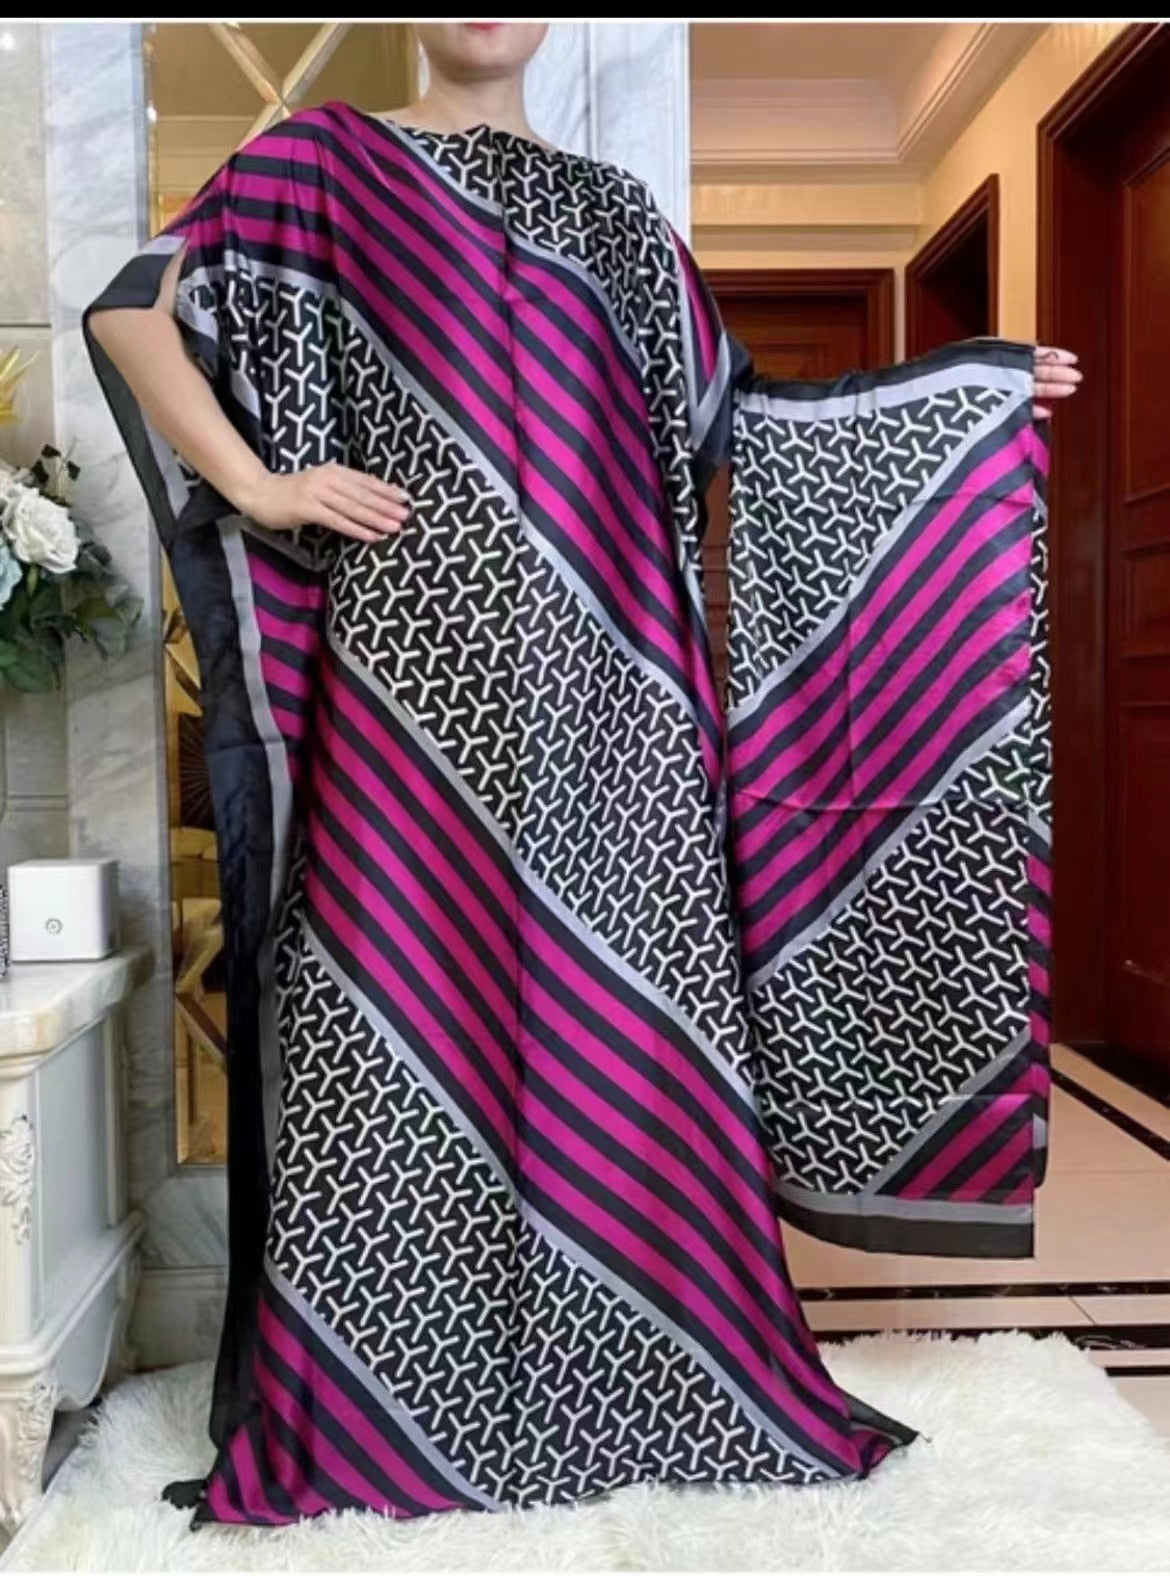 2023 New Style Fashion Oversize African Women Clothing Dubai Dashiki Abaya Free Size Print Design With Scarf Loose Long Dress